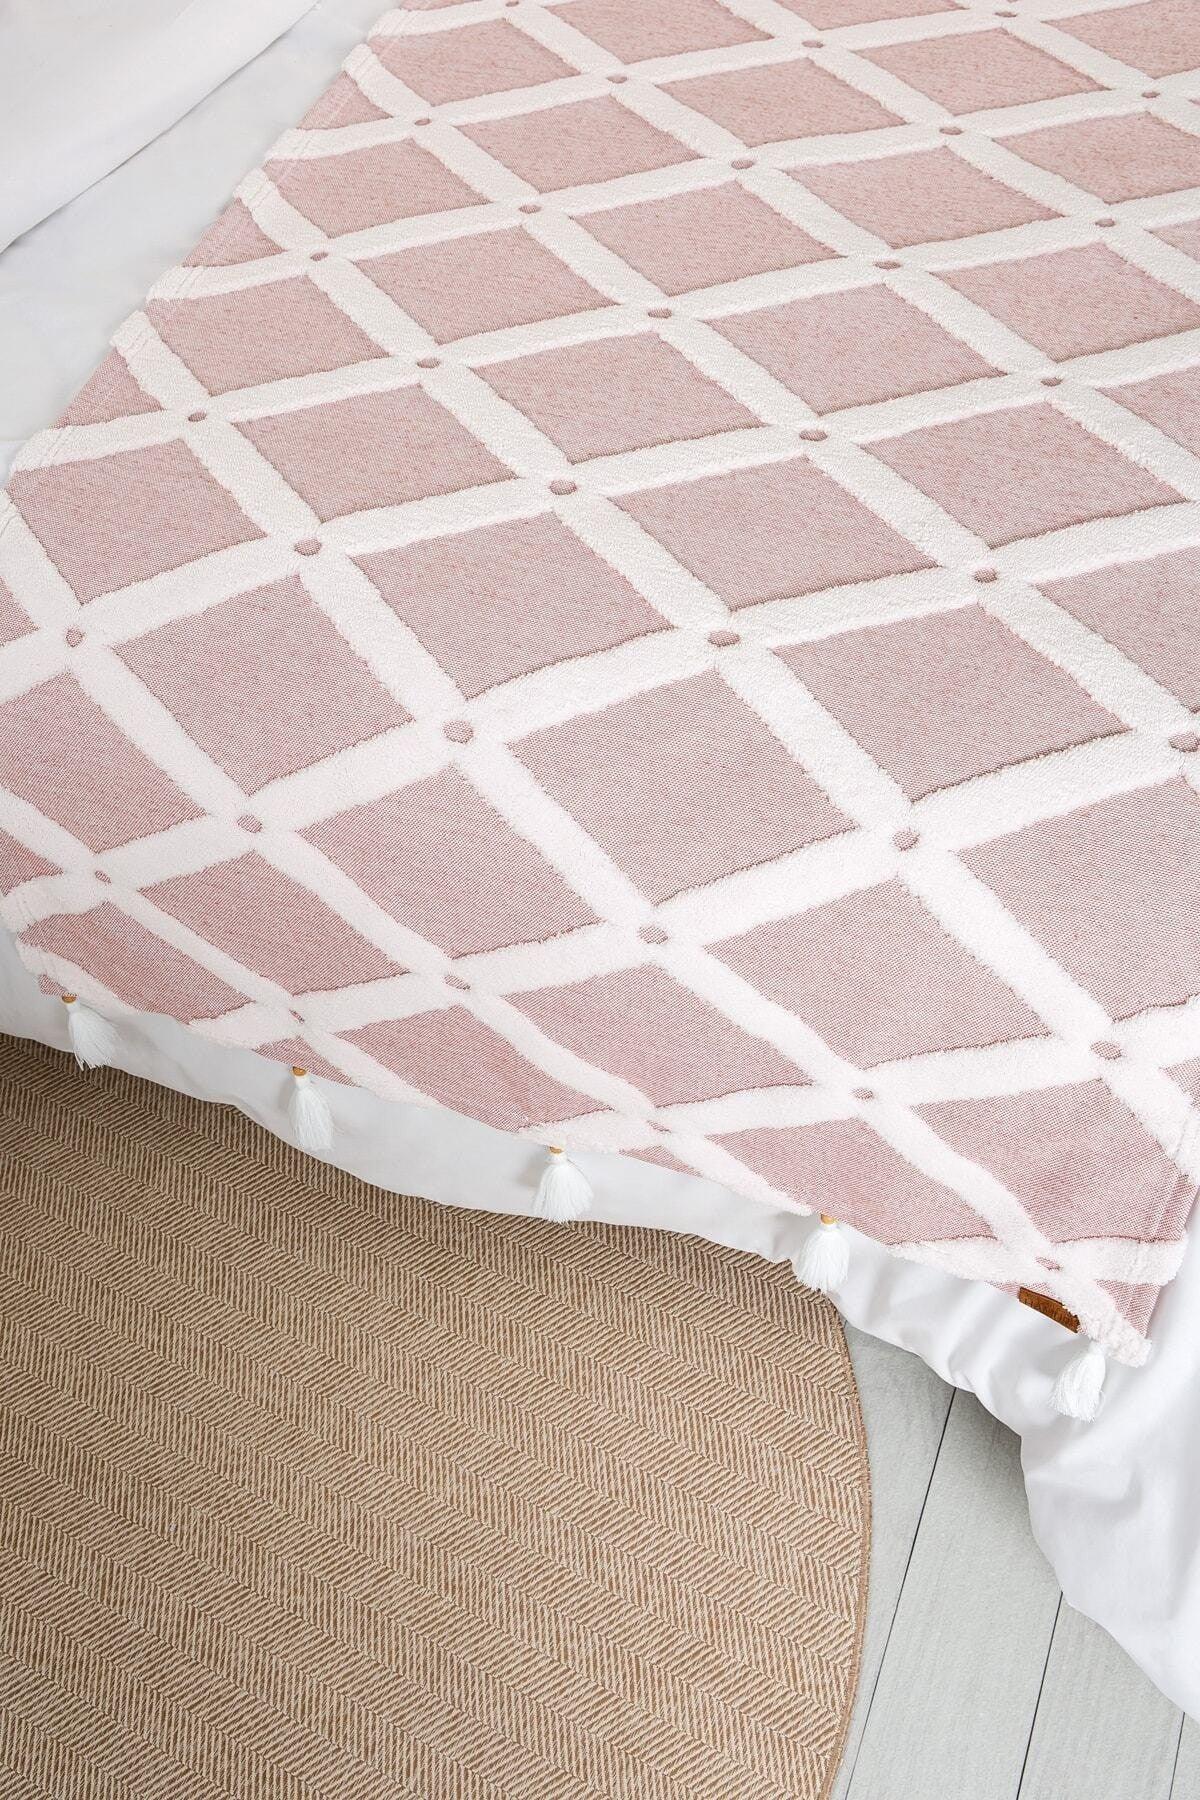 Bed Runner Throw Pillow Set Bohemian Punch Punch Pattern Bedspread Bella Dried Rose - Swordslife